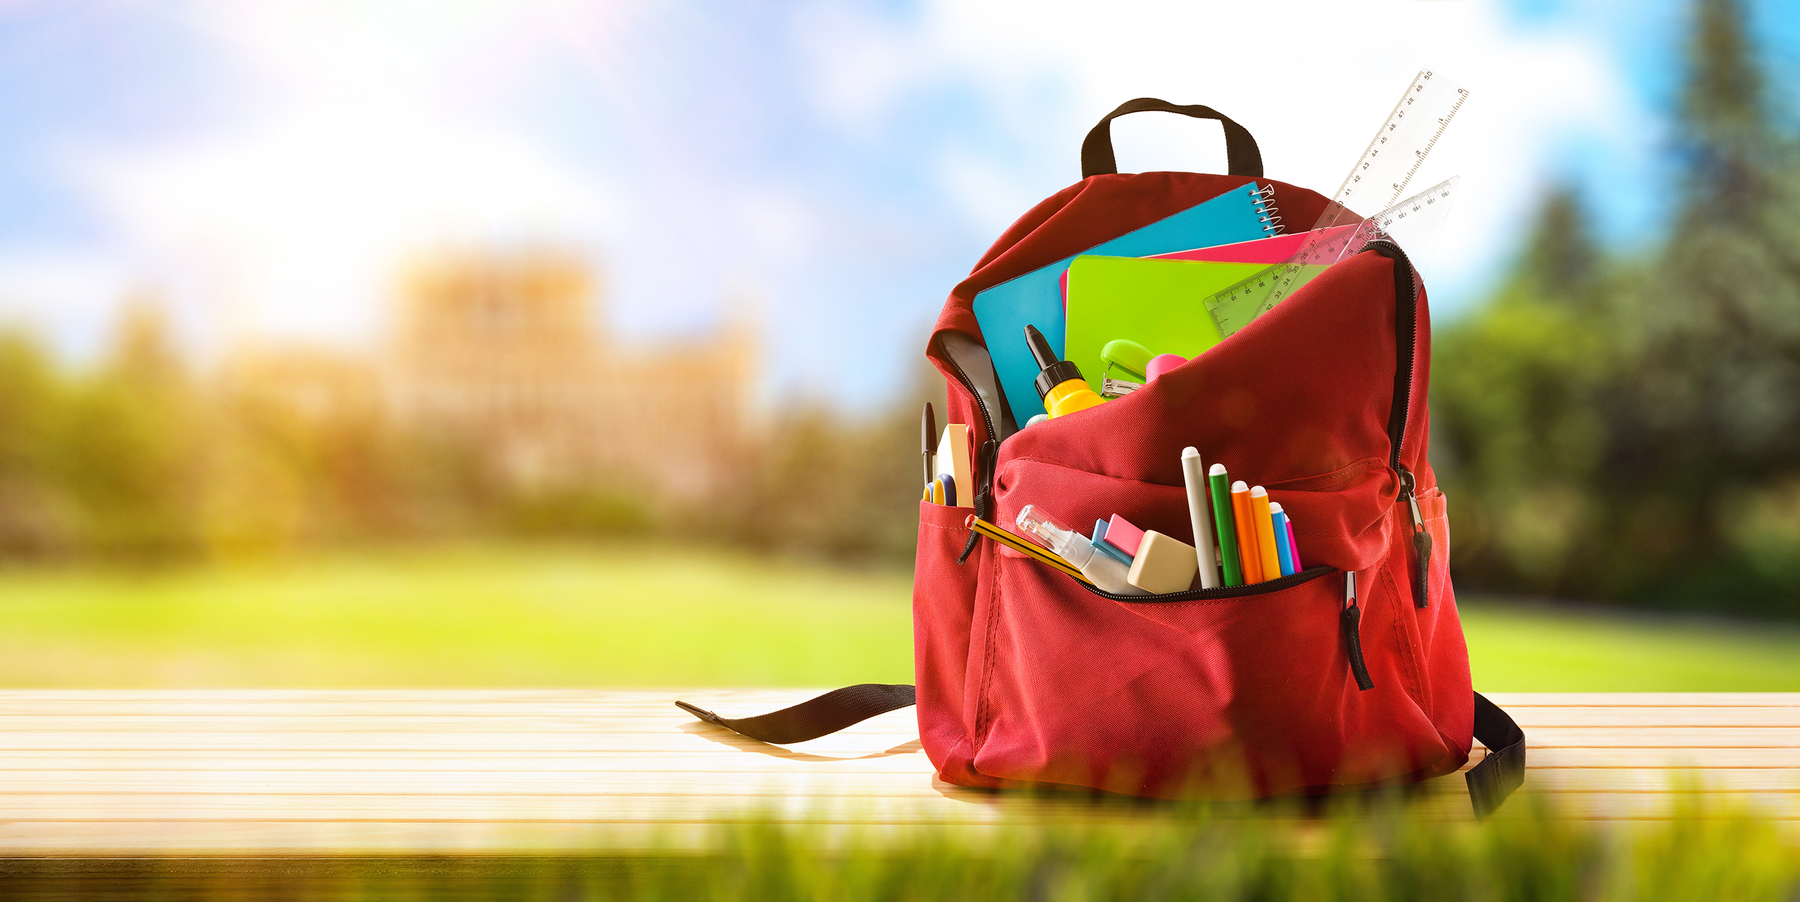 Backpack school supply kits that make back-to-school shopping fun